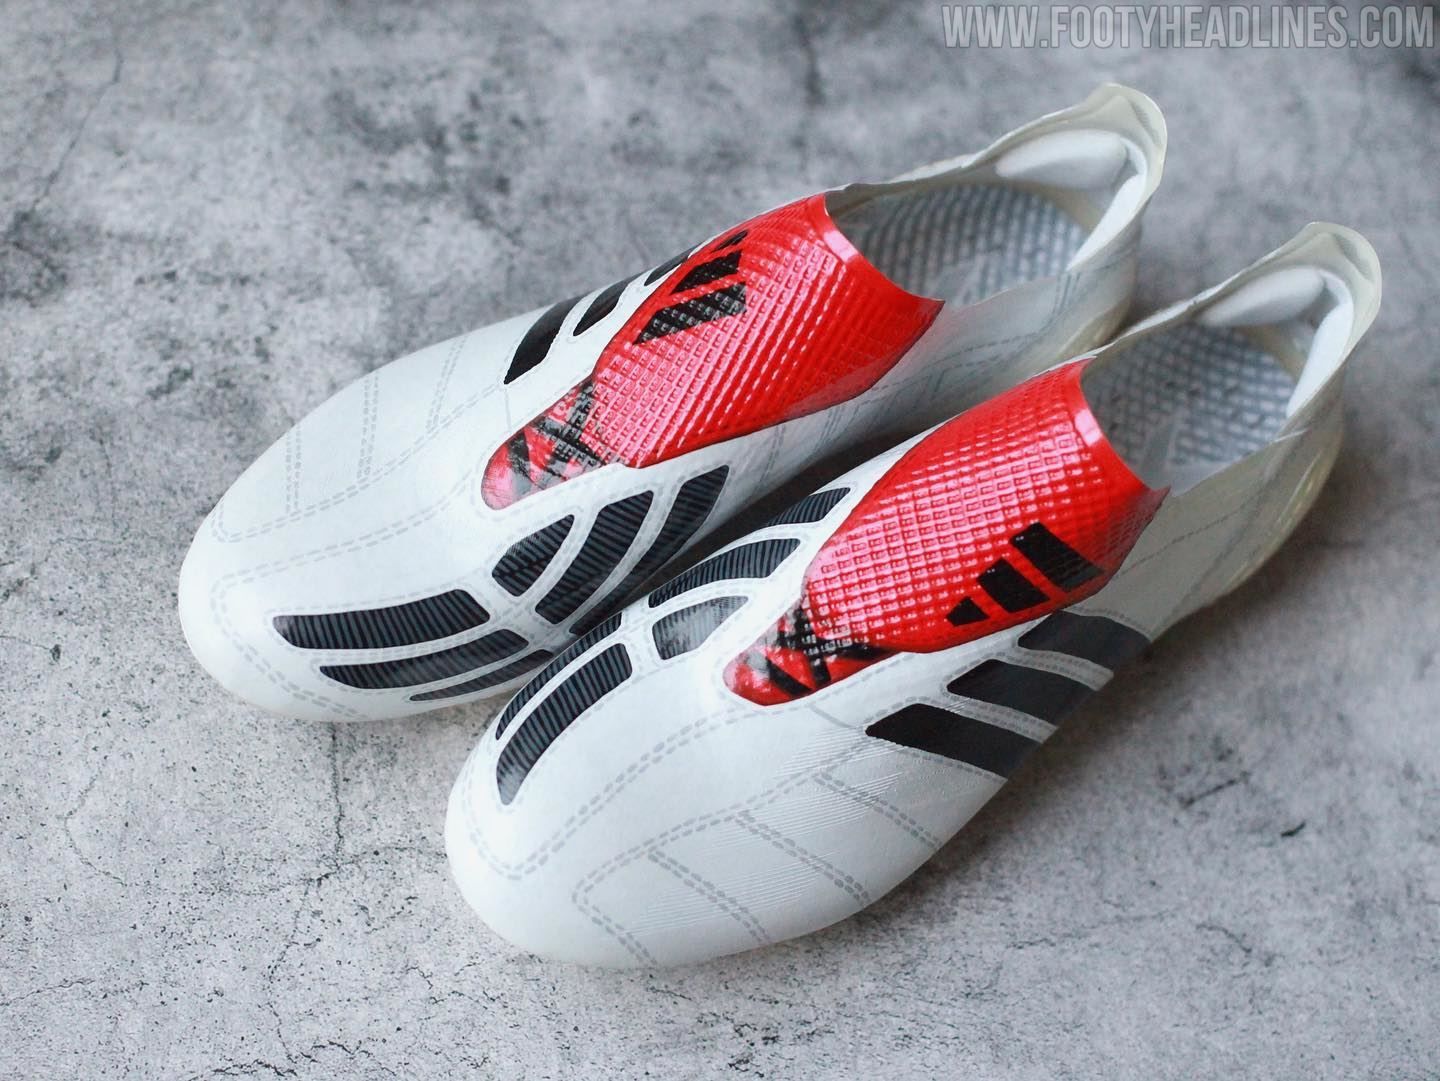 Morata Wears Insane Adidas X Ghosted Predator Mania Hybrid Boots ...